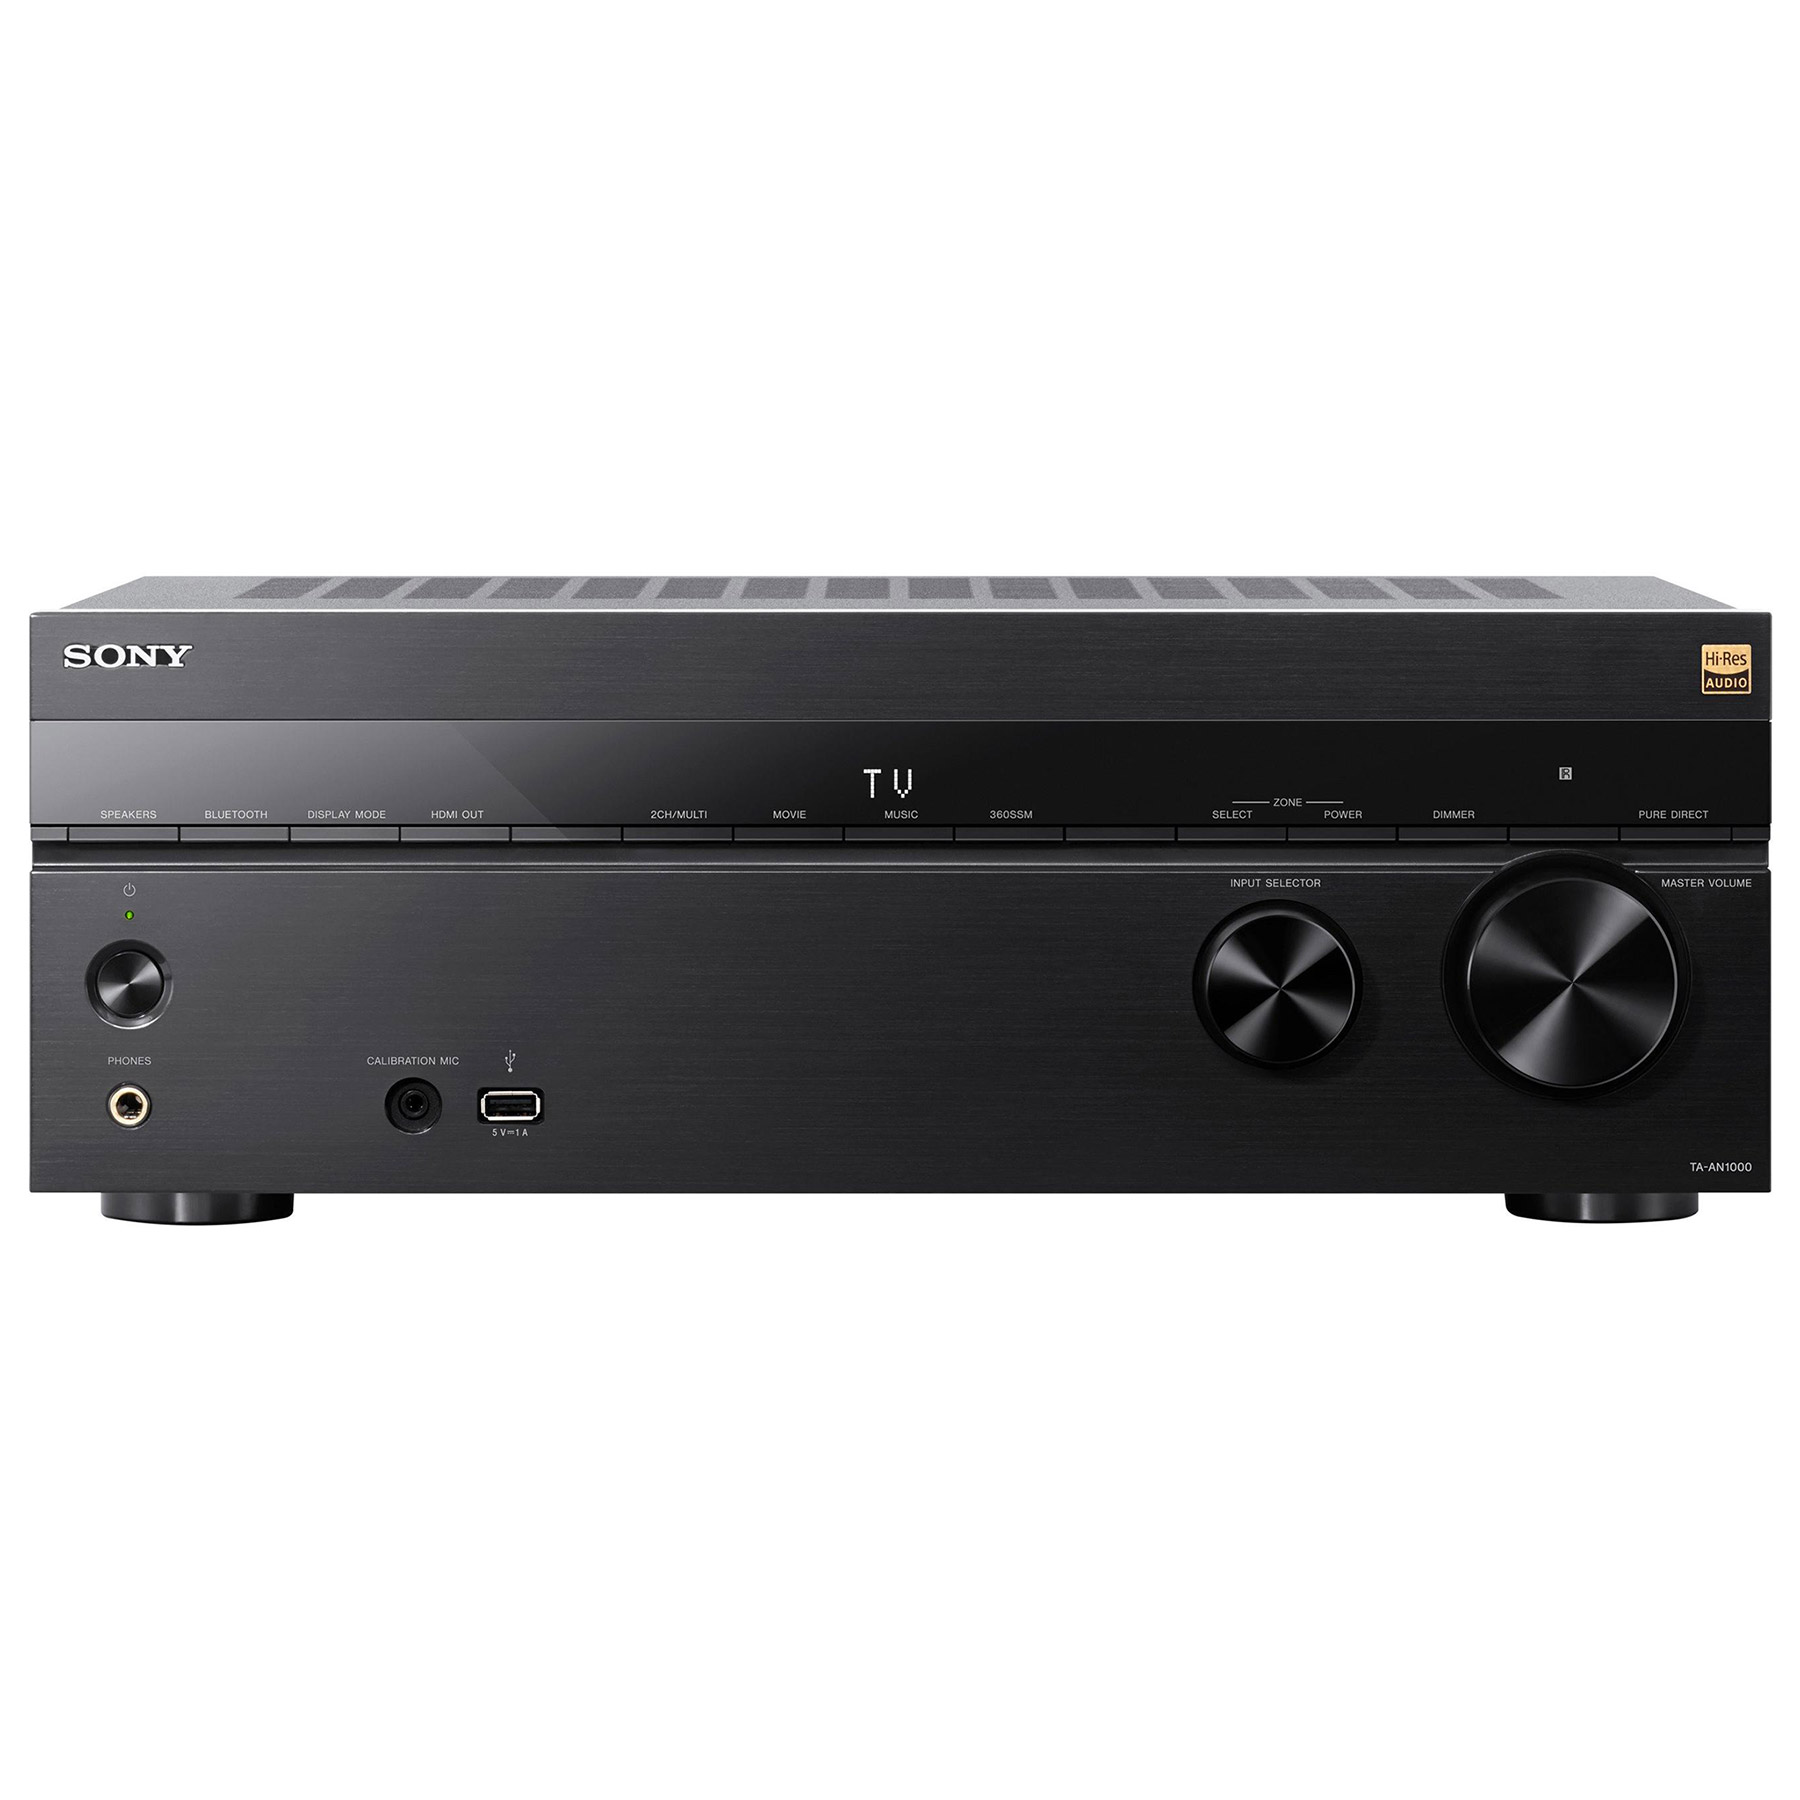 Image of Sony TAAN1000 7 1 Channel Dolby Atmos DTS X AV Amplifier in Black